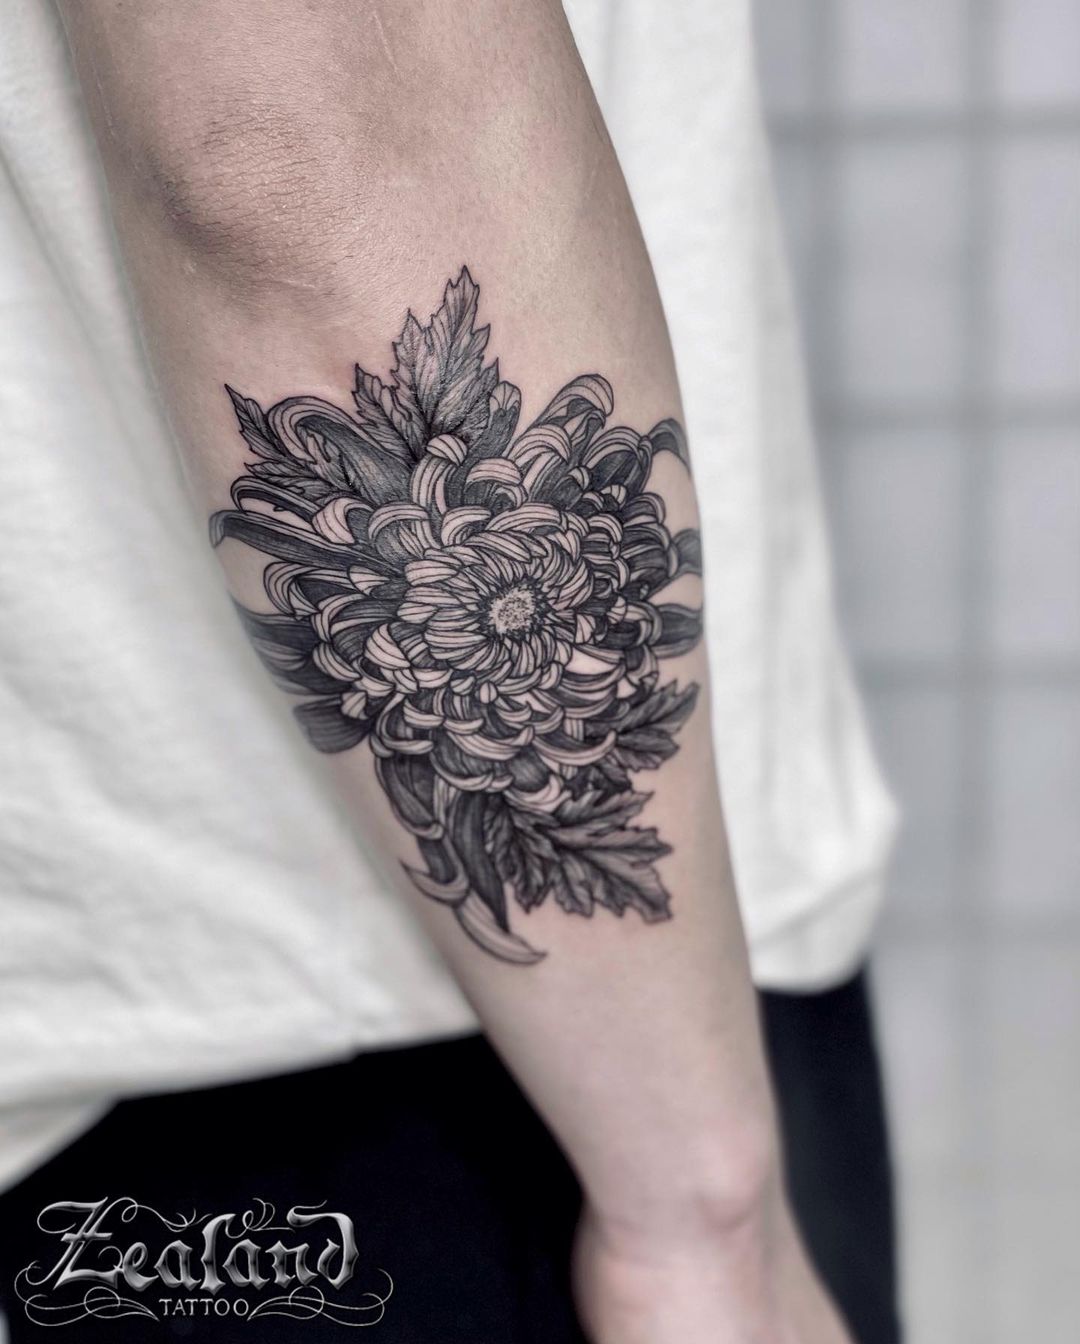 26 Most Beautiful Chrysanthemum Tattoos  Moms Got the Stuff